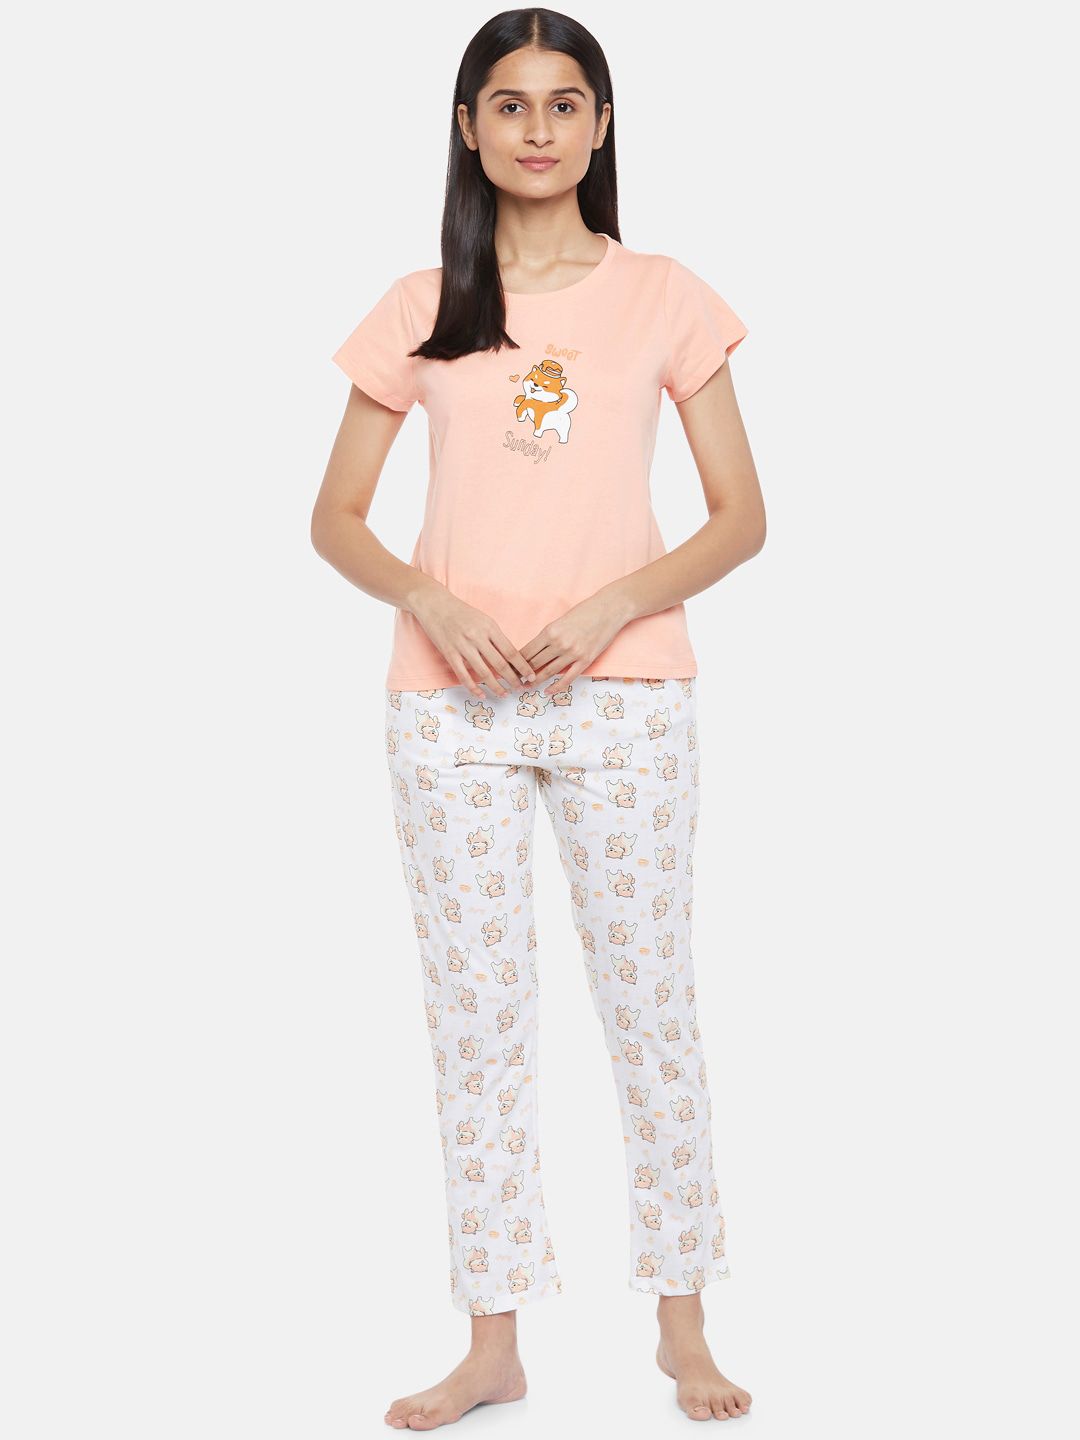 Dreamz by Pantaloons Women Orange & White Printed Night suit Price in India